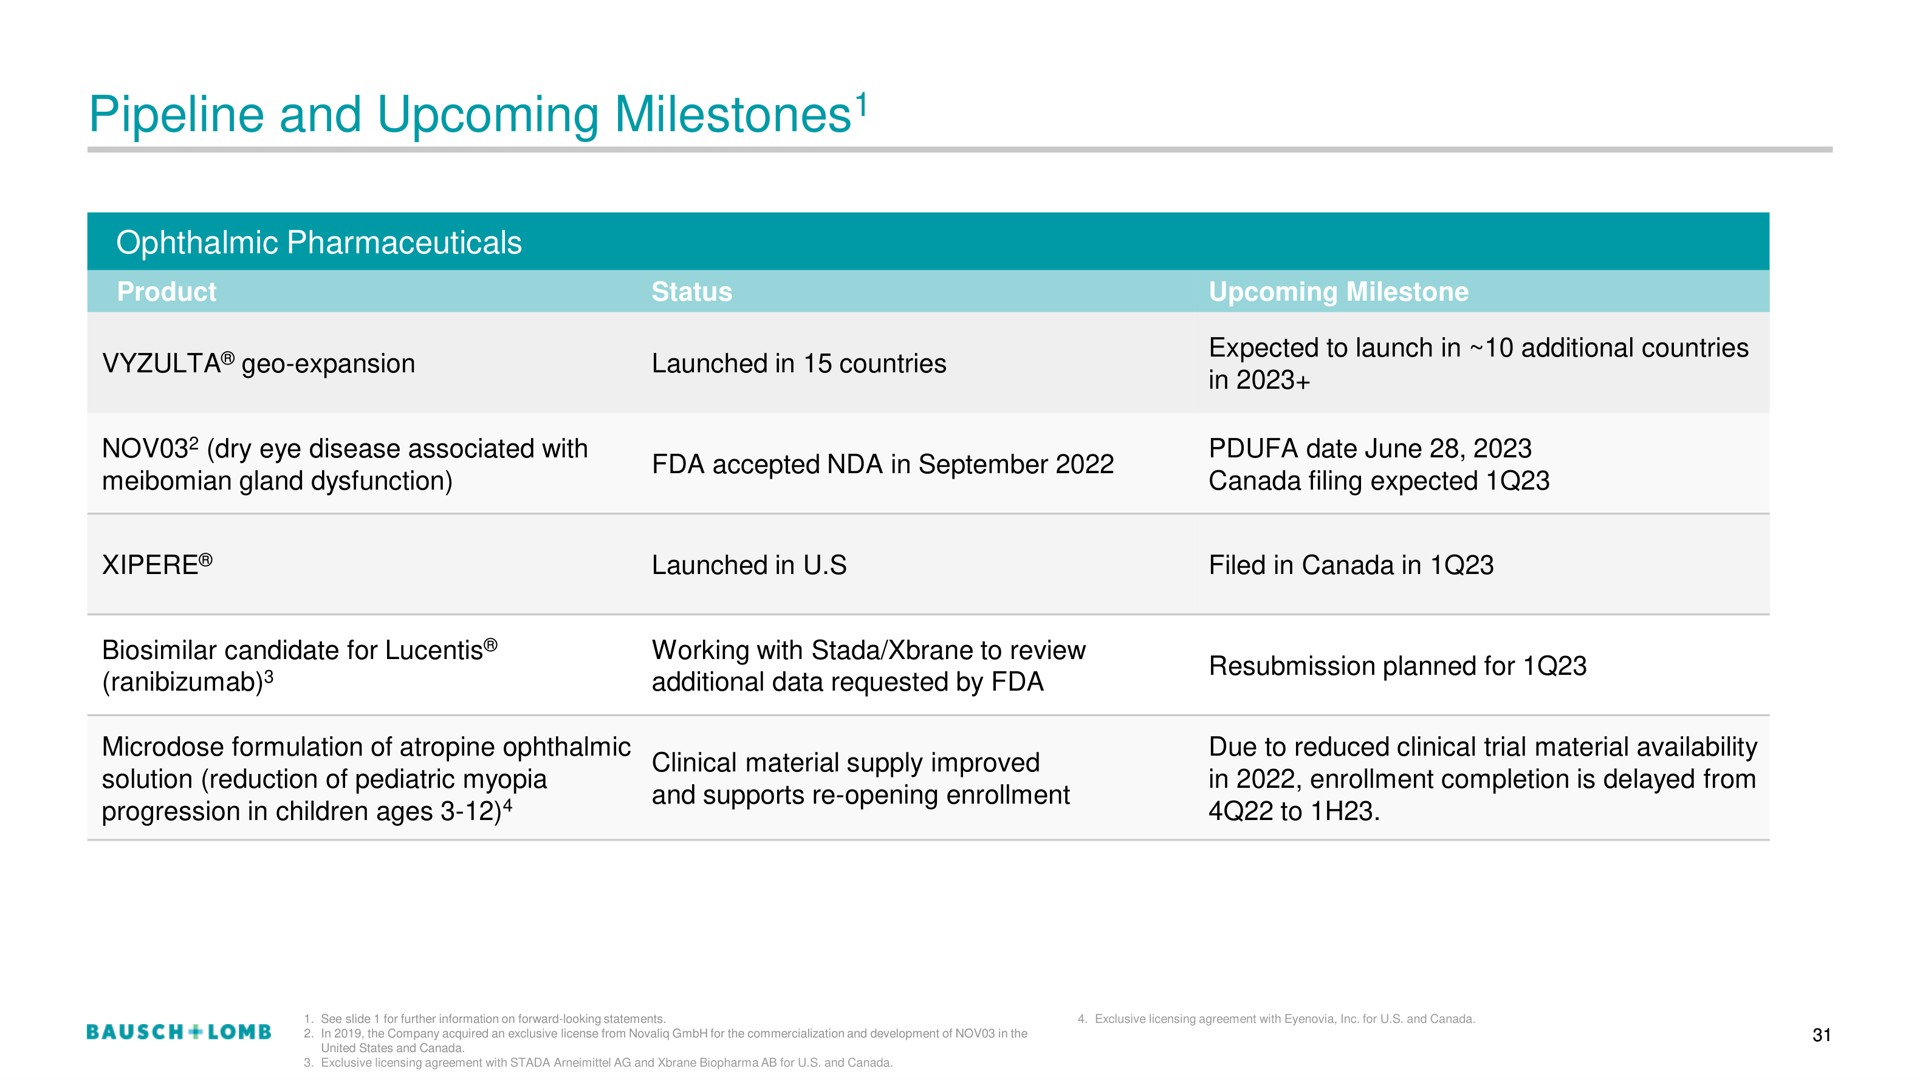 pipeline and upcoming milestones milestones | Bausch+Lomb